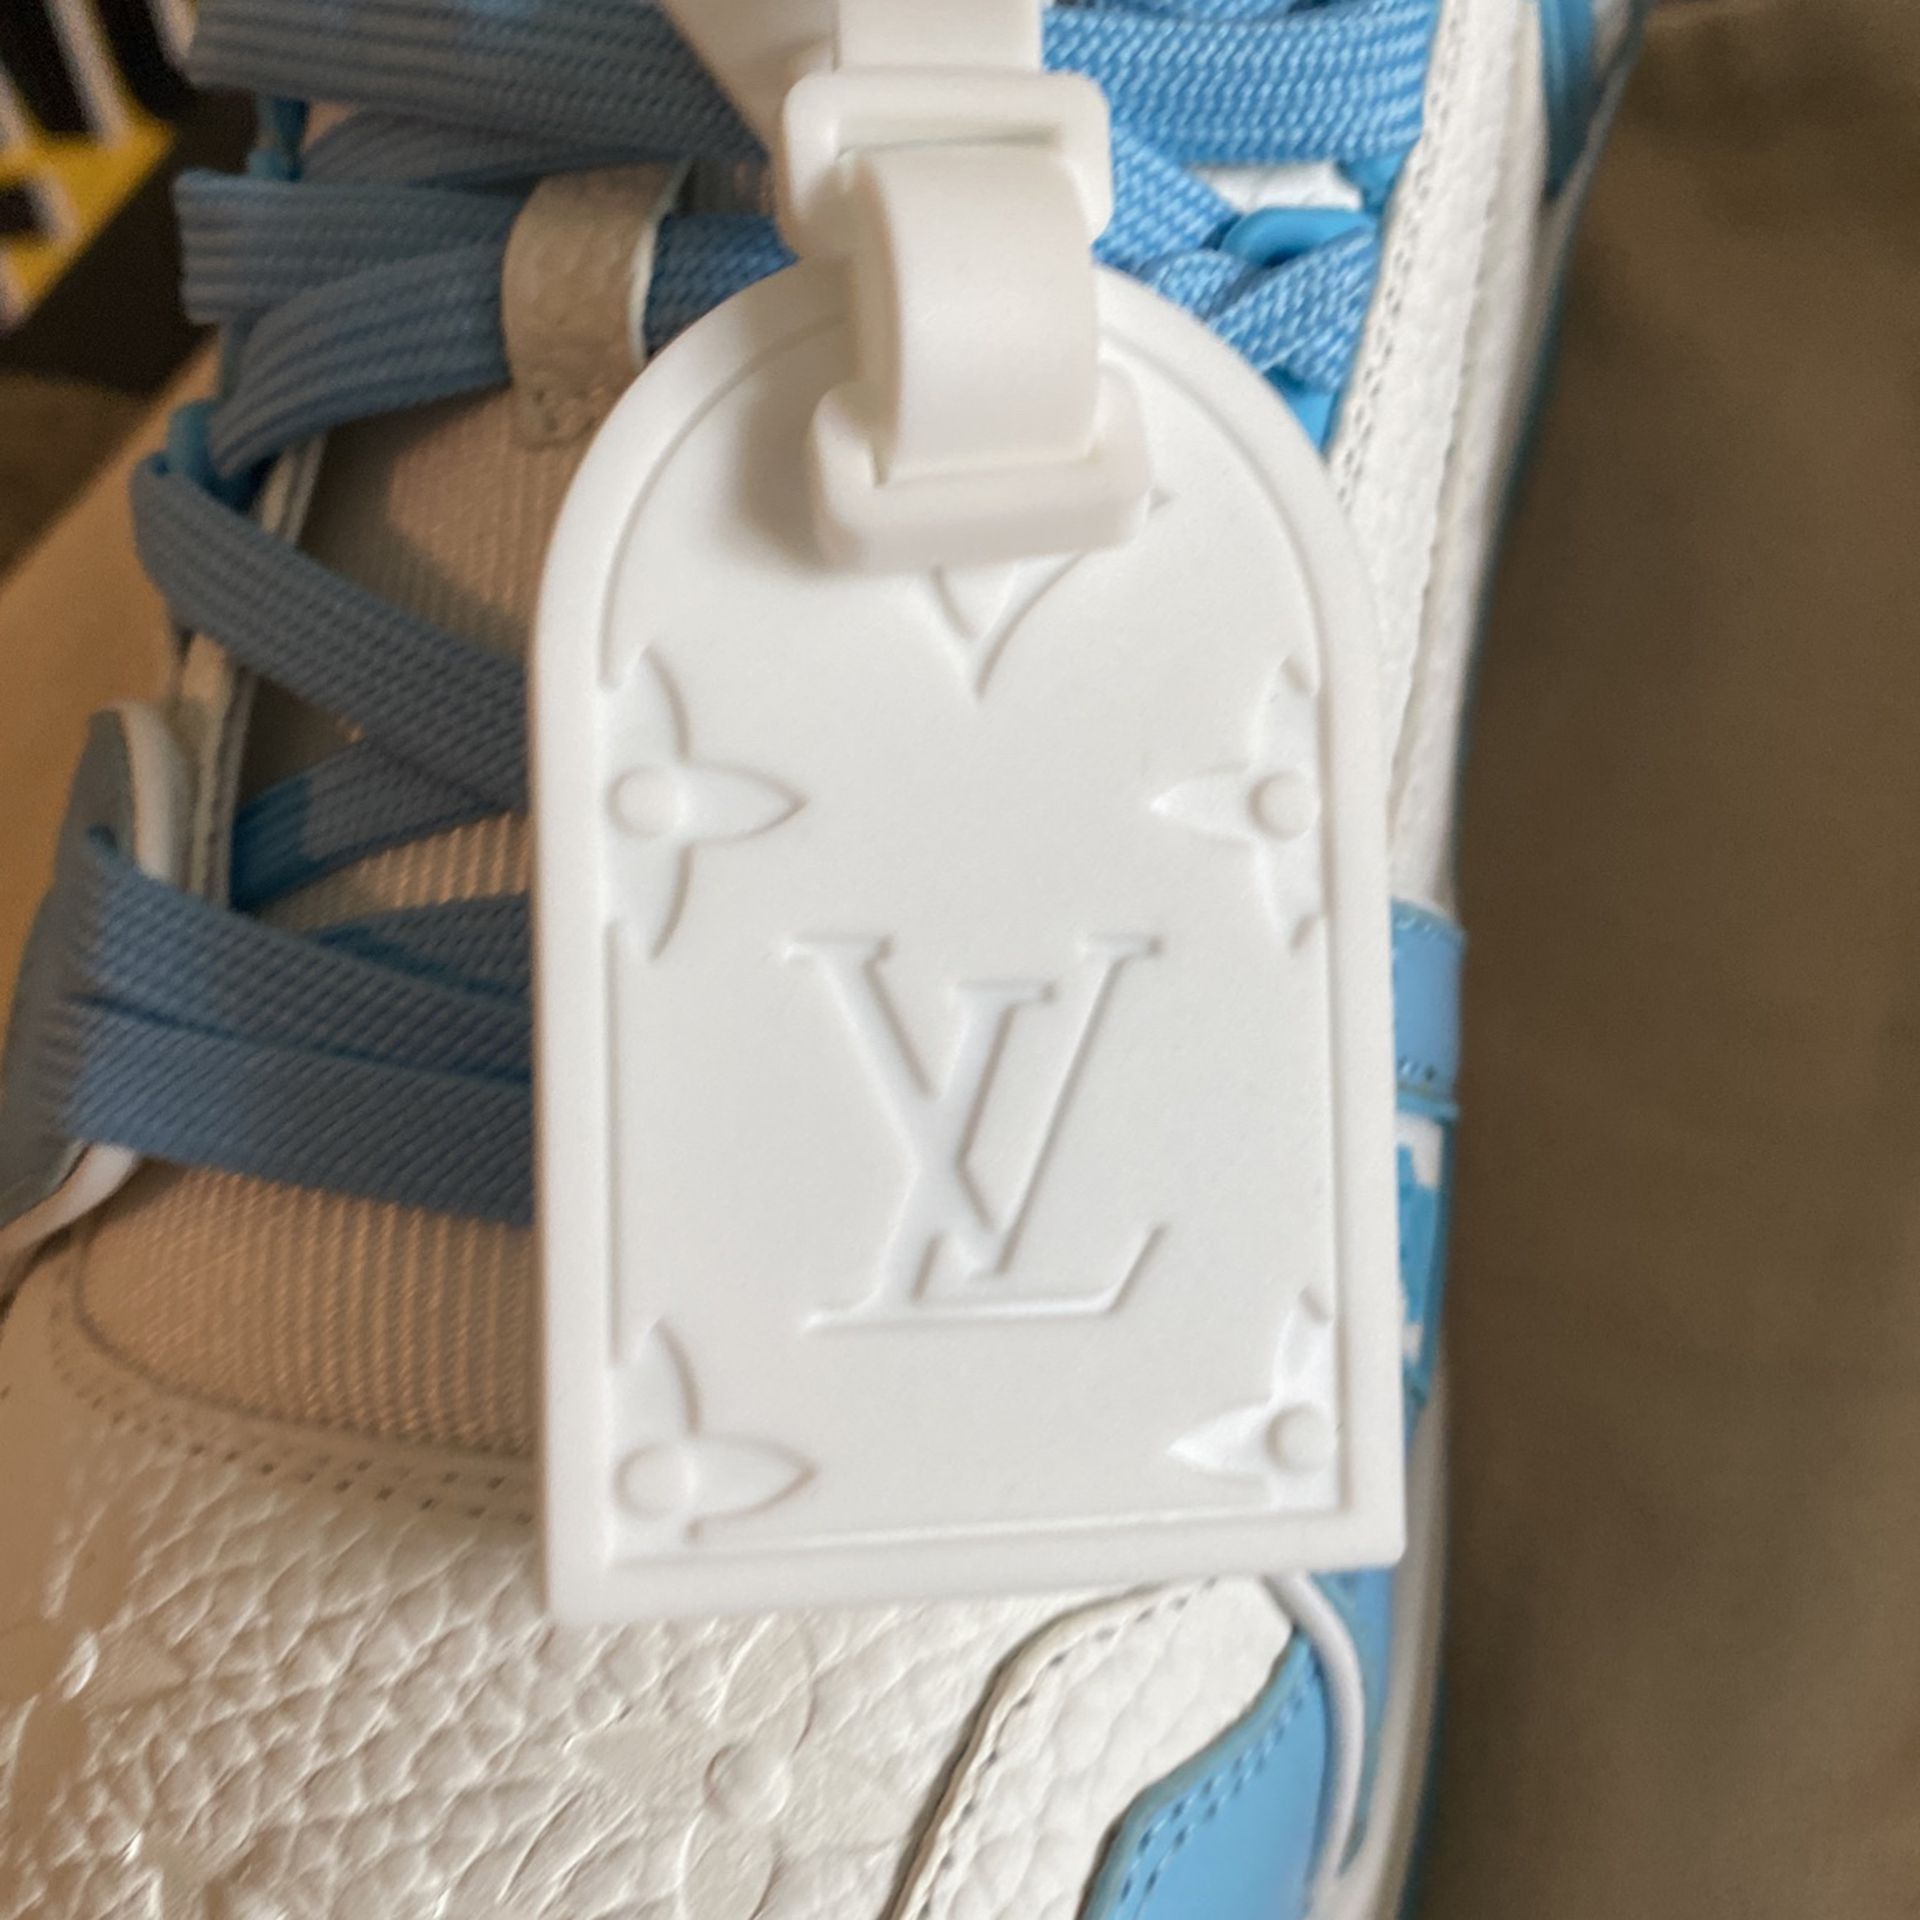 Louis Vuitton Trainer 'Sky Blue' Sneakers Men's size 9 for Sale in  Philadelphia, PA - OfferUp